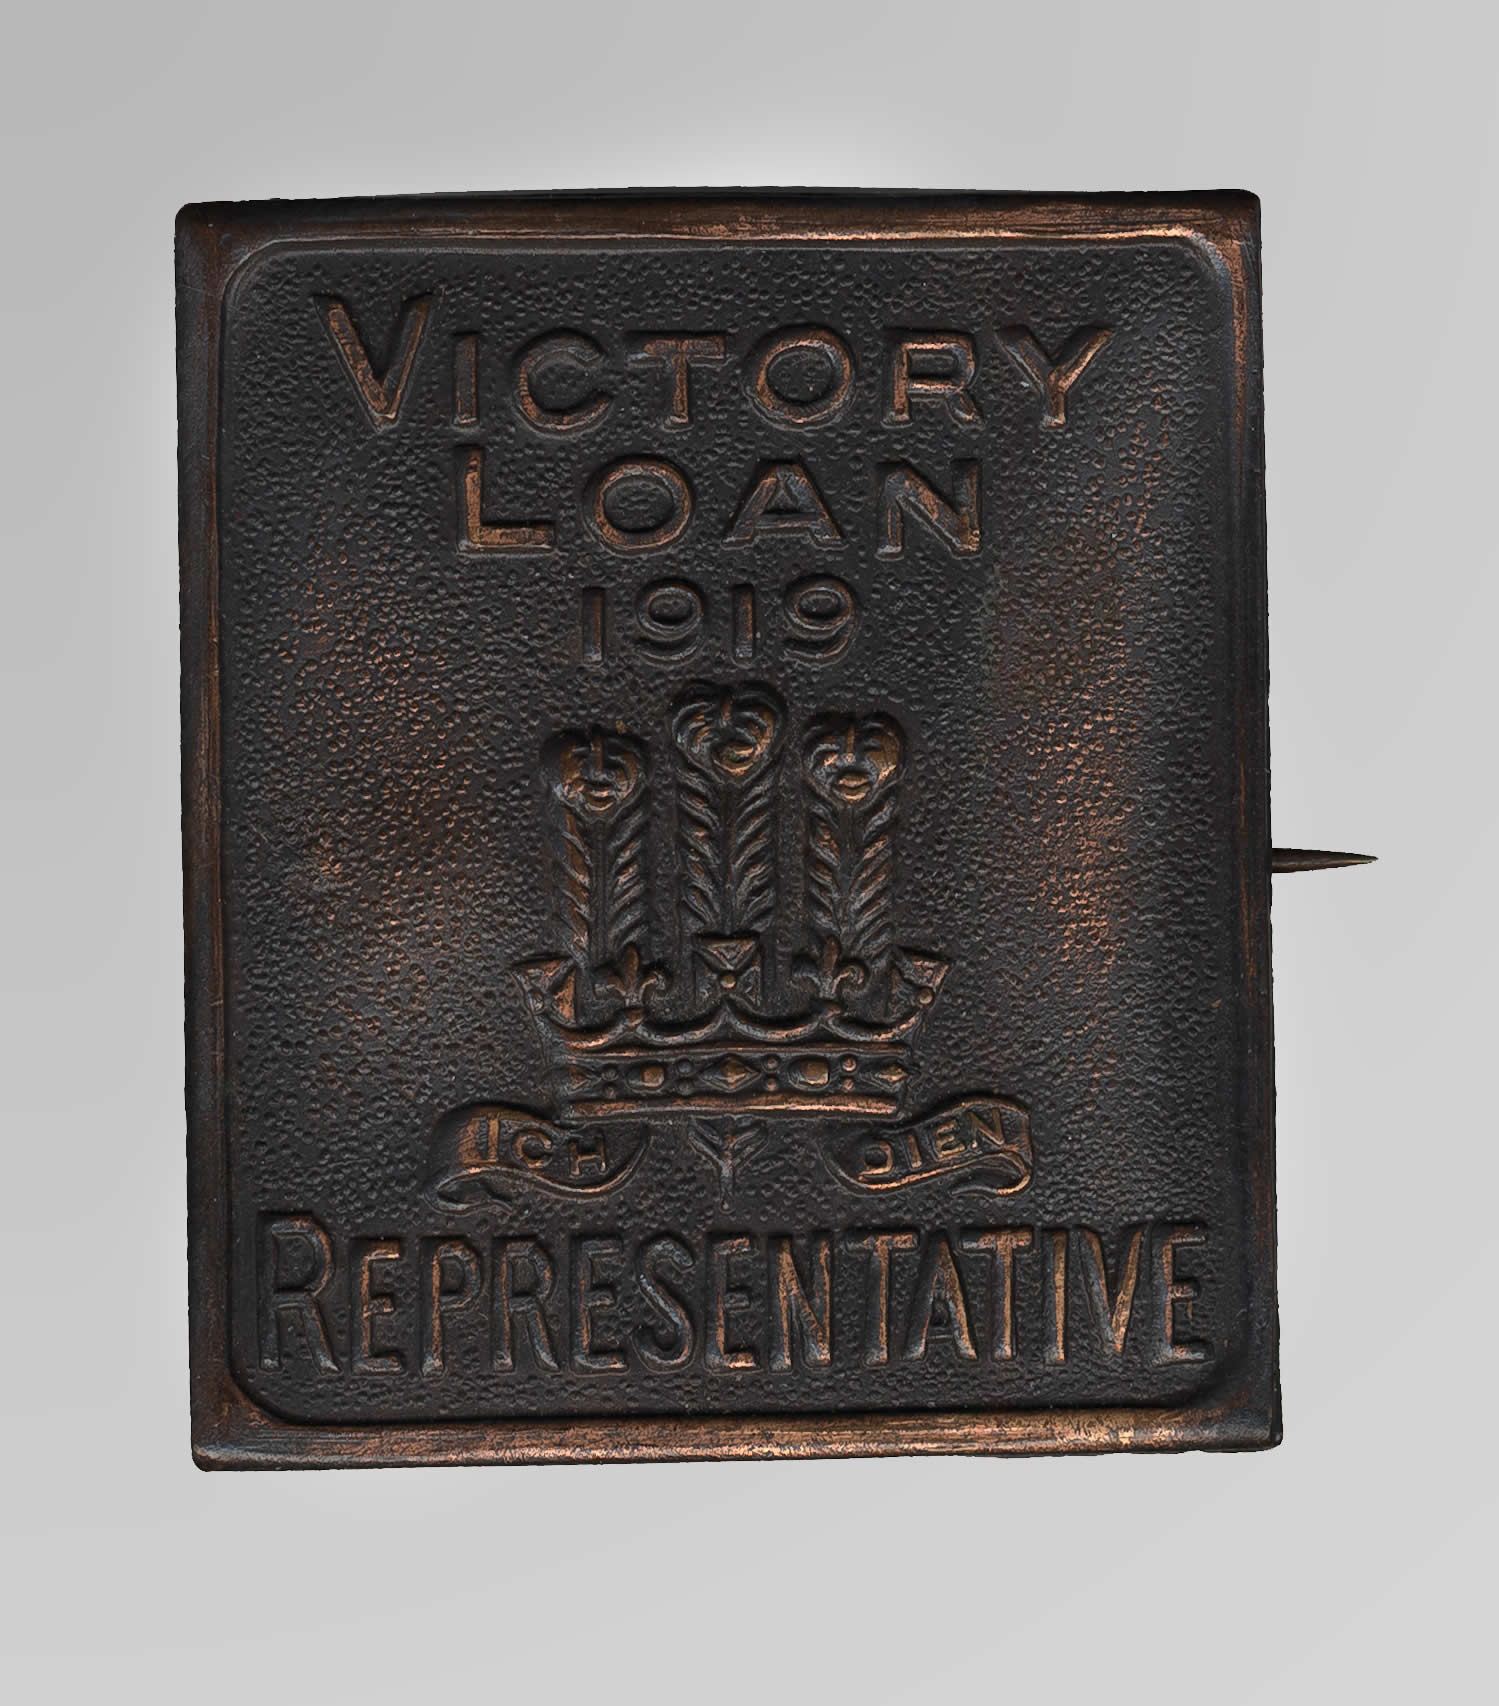 Victory Loan Representative